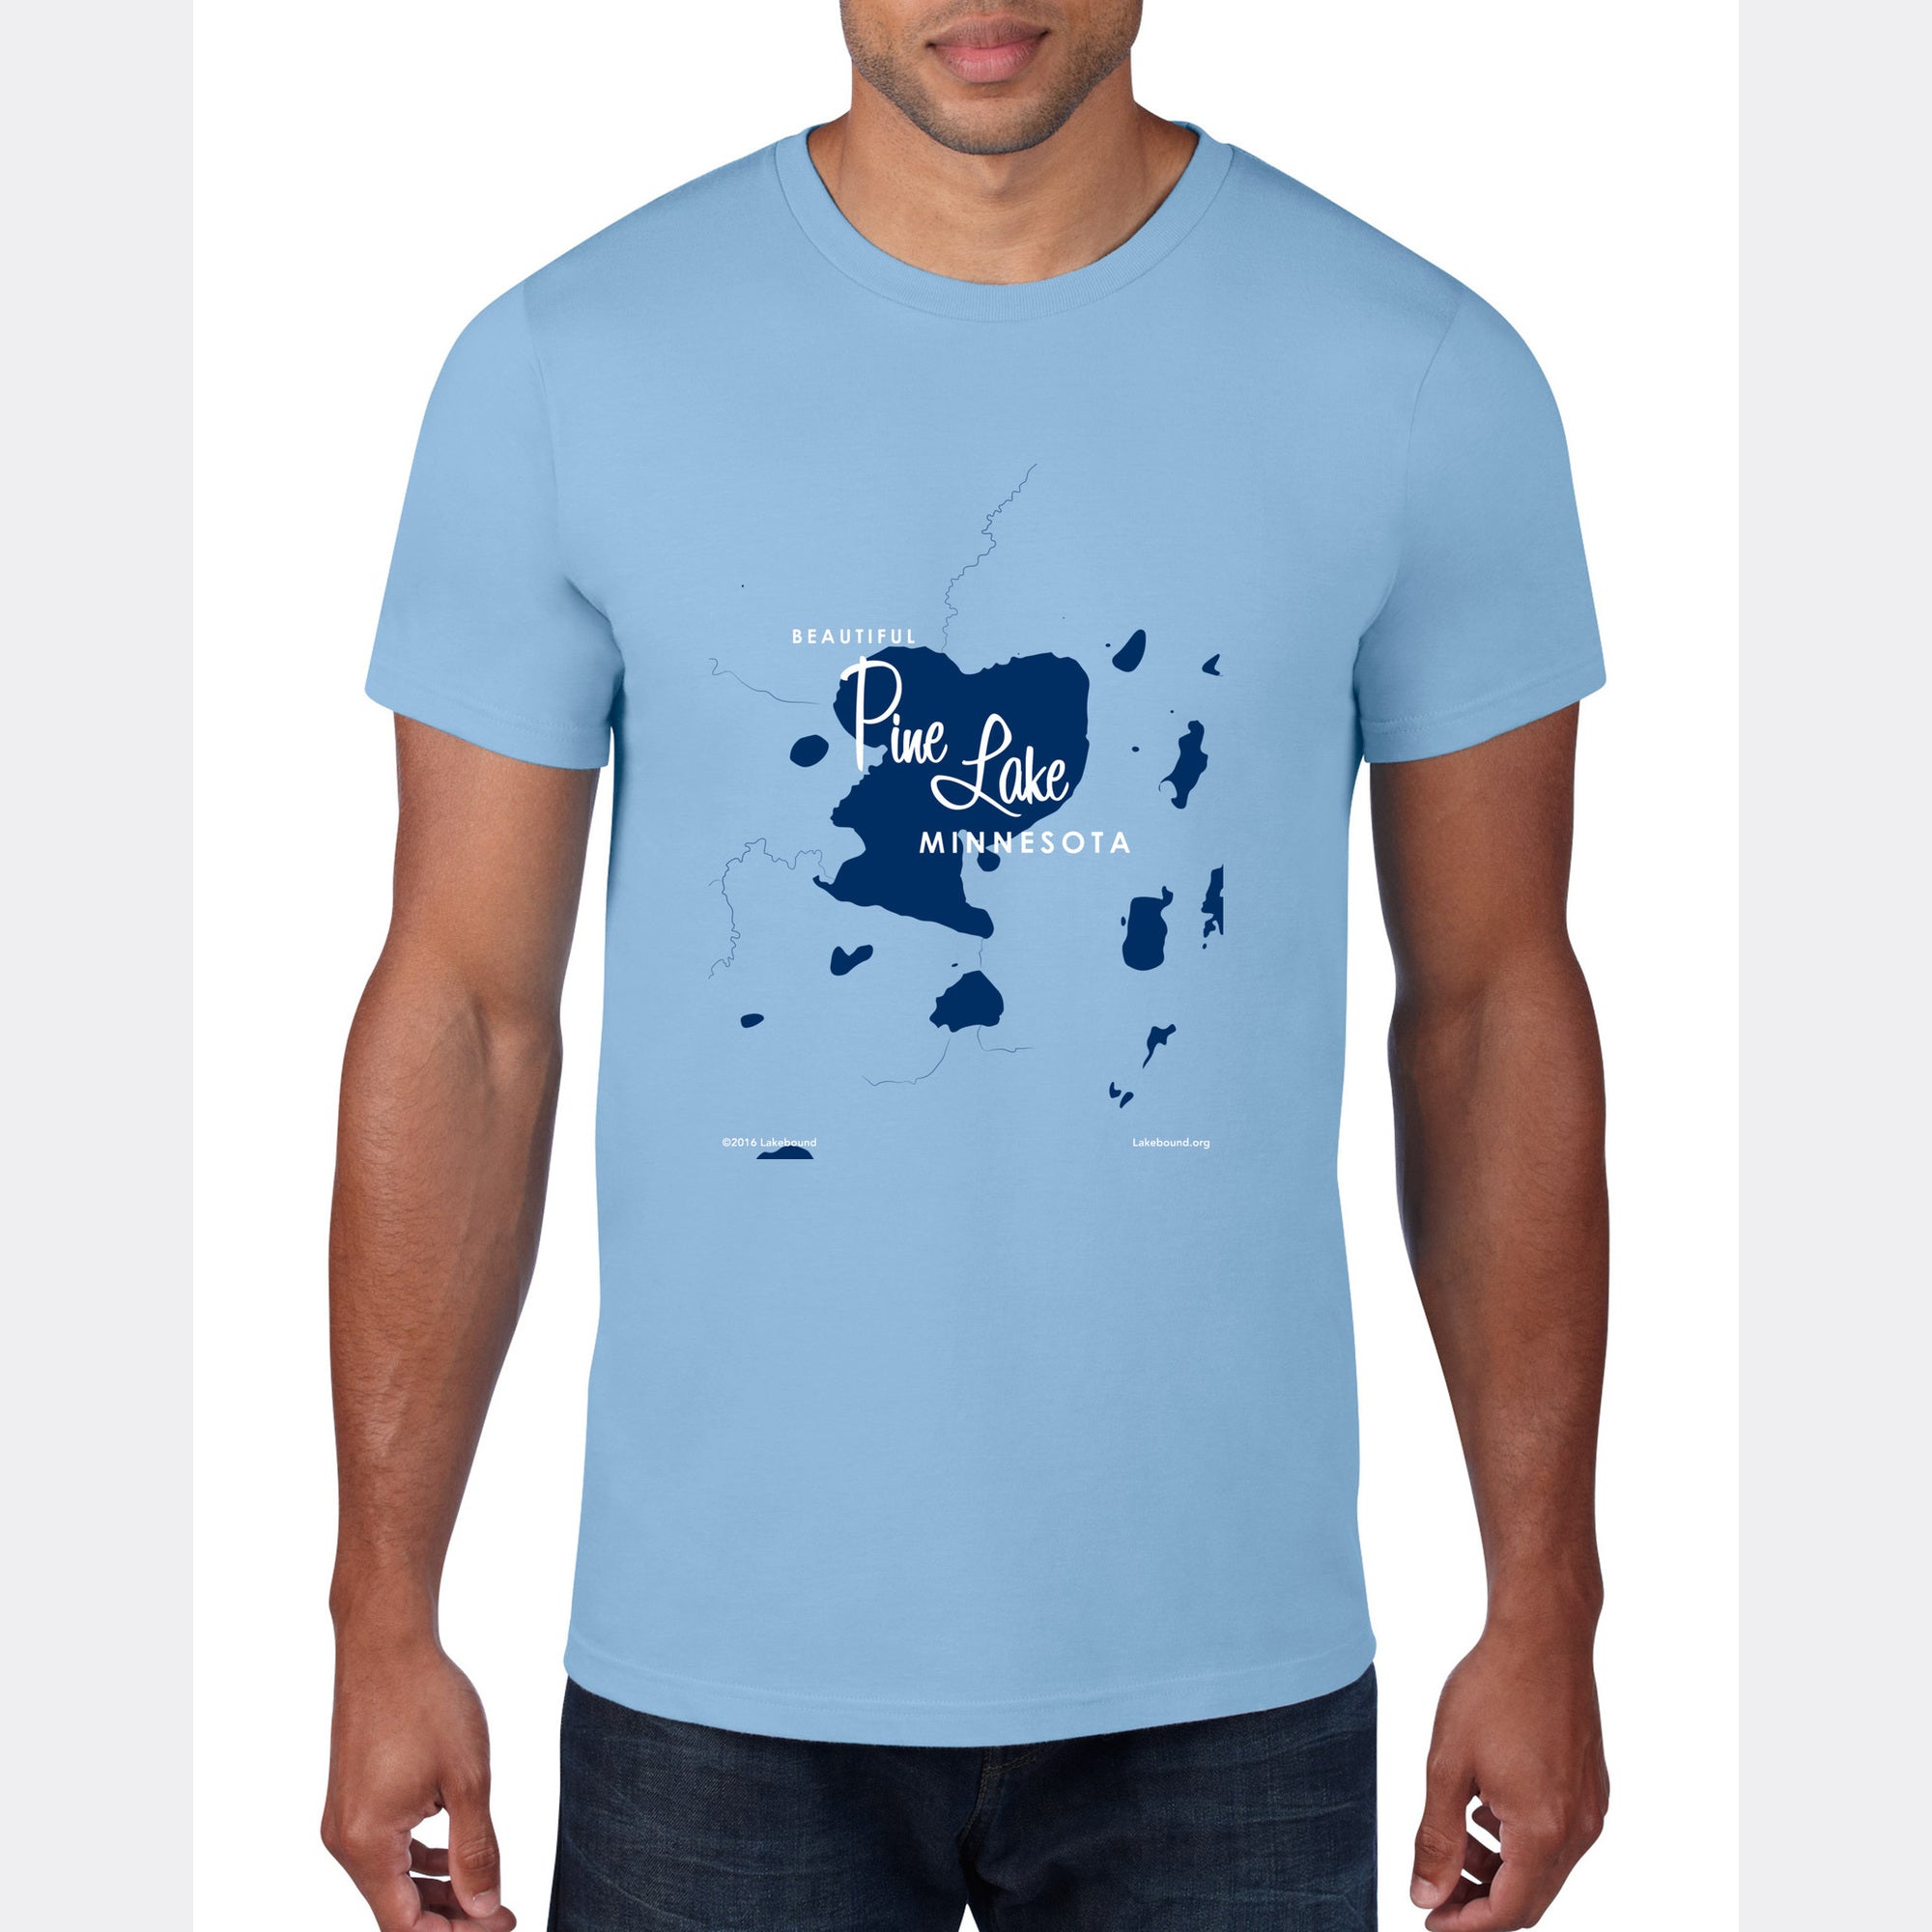 Pine Lake Minnesota, T-Shirt